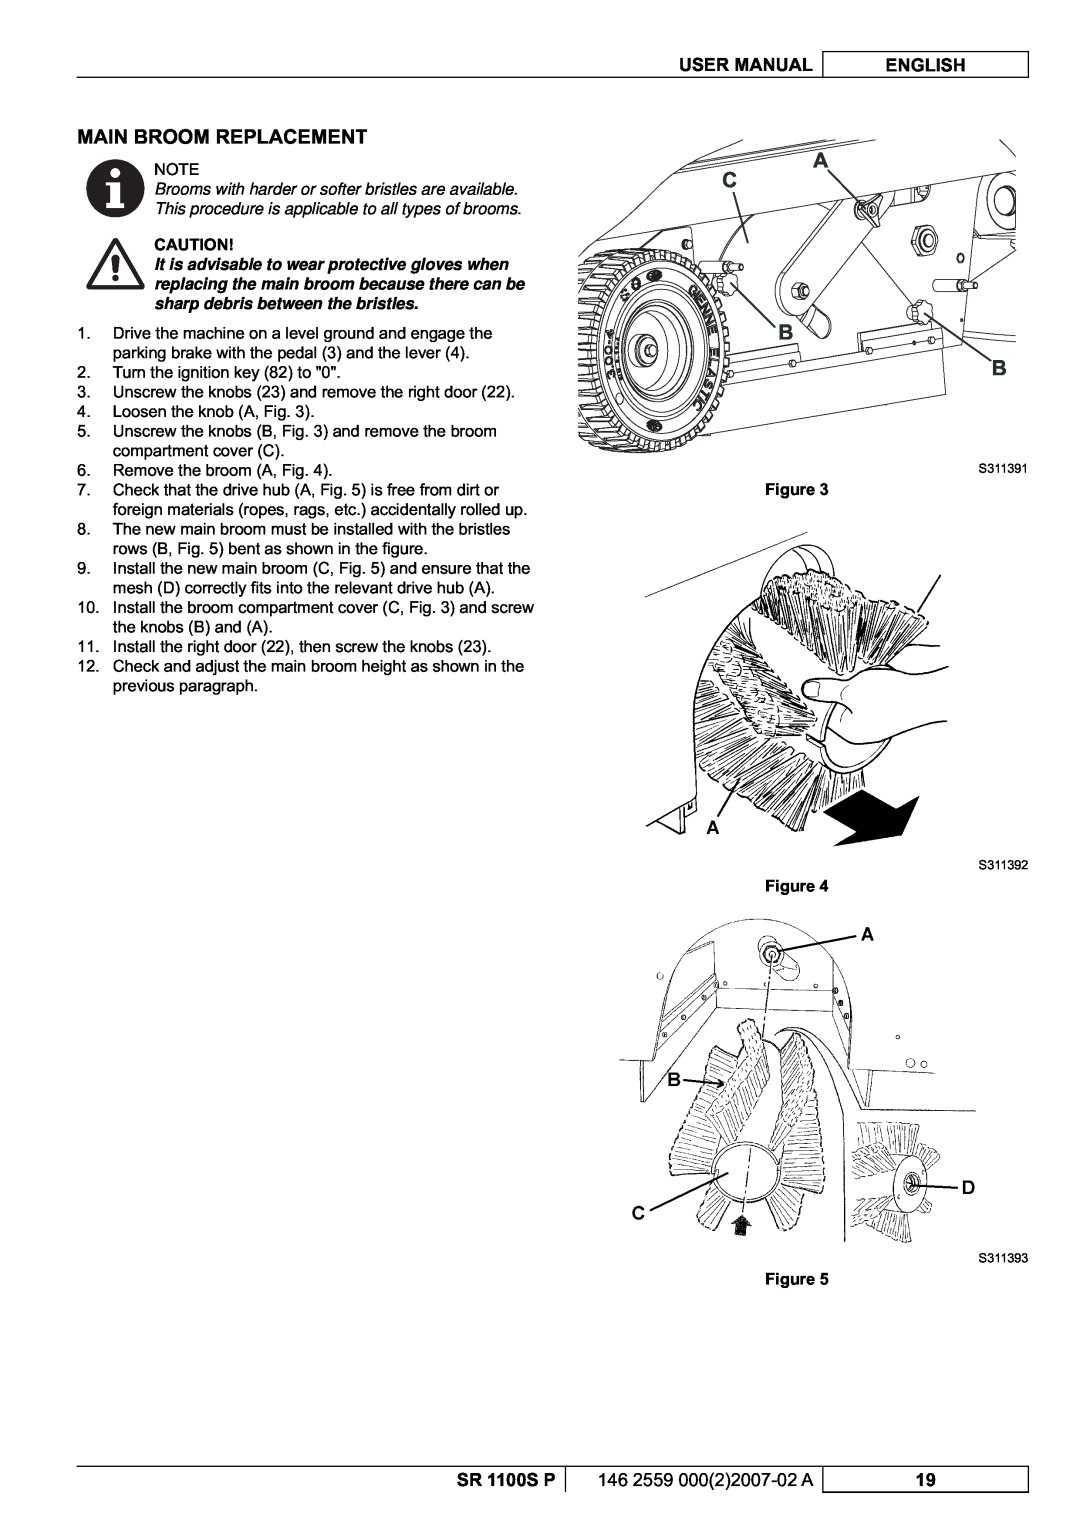 Nilfisk-Advance America Main Broom Replacement, User Manual, English, SR 1100S P, 146 2559 00022007-02A, Figure 